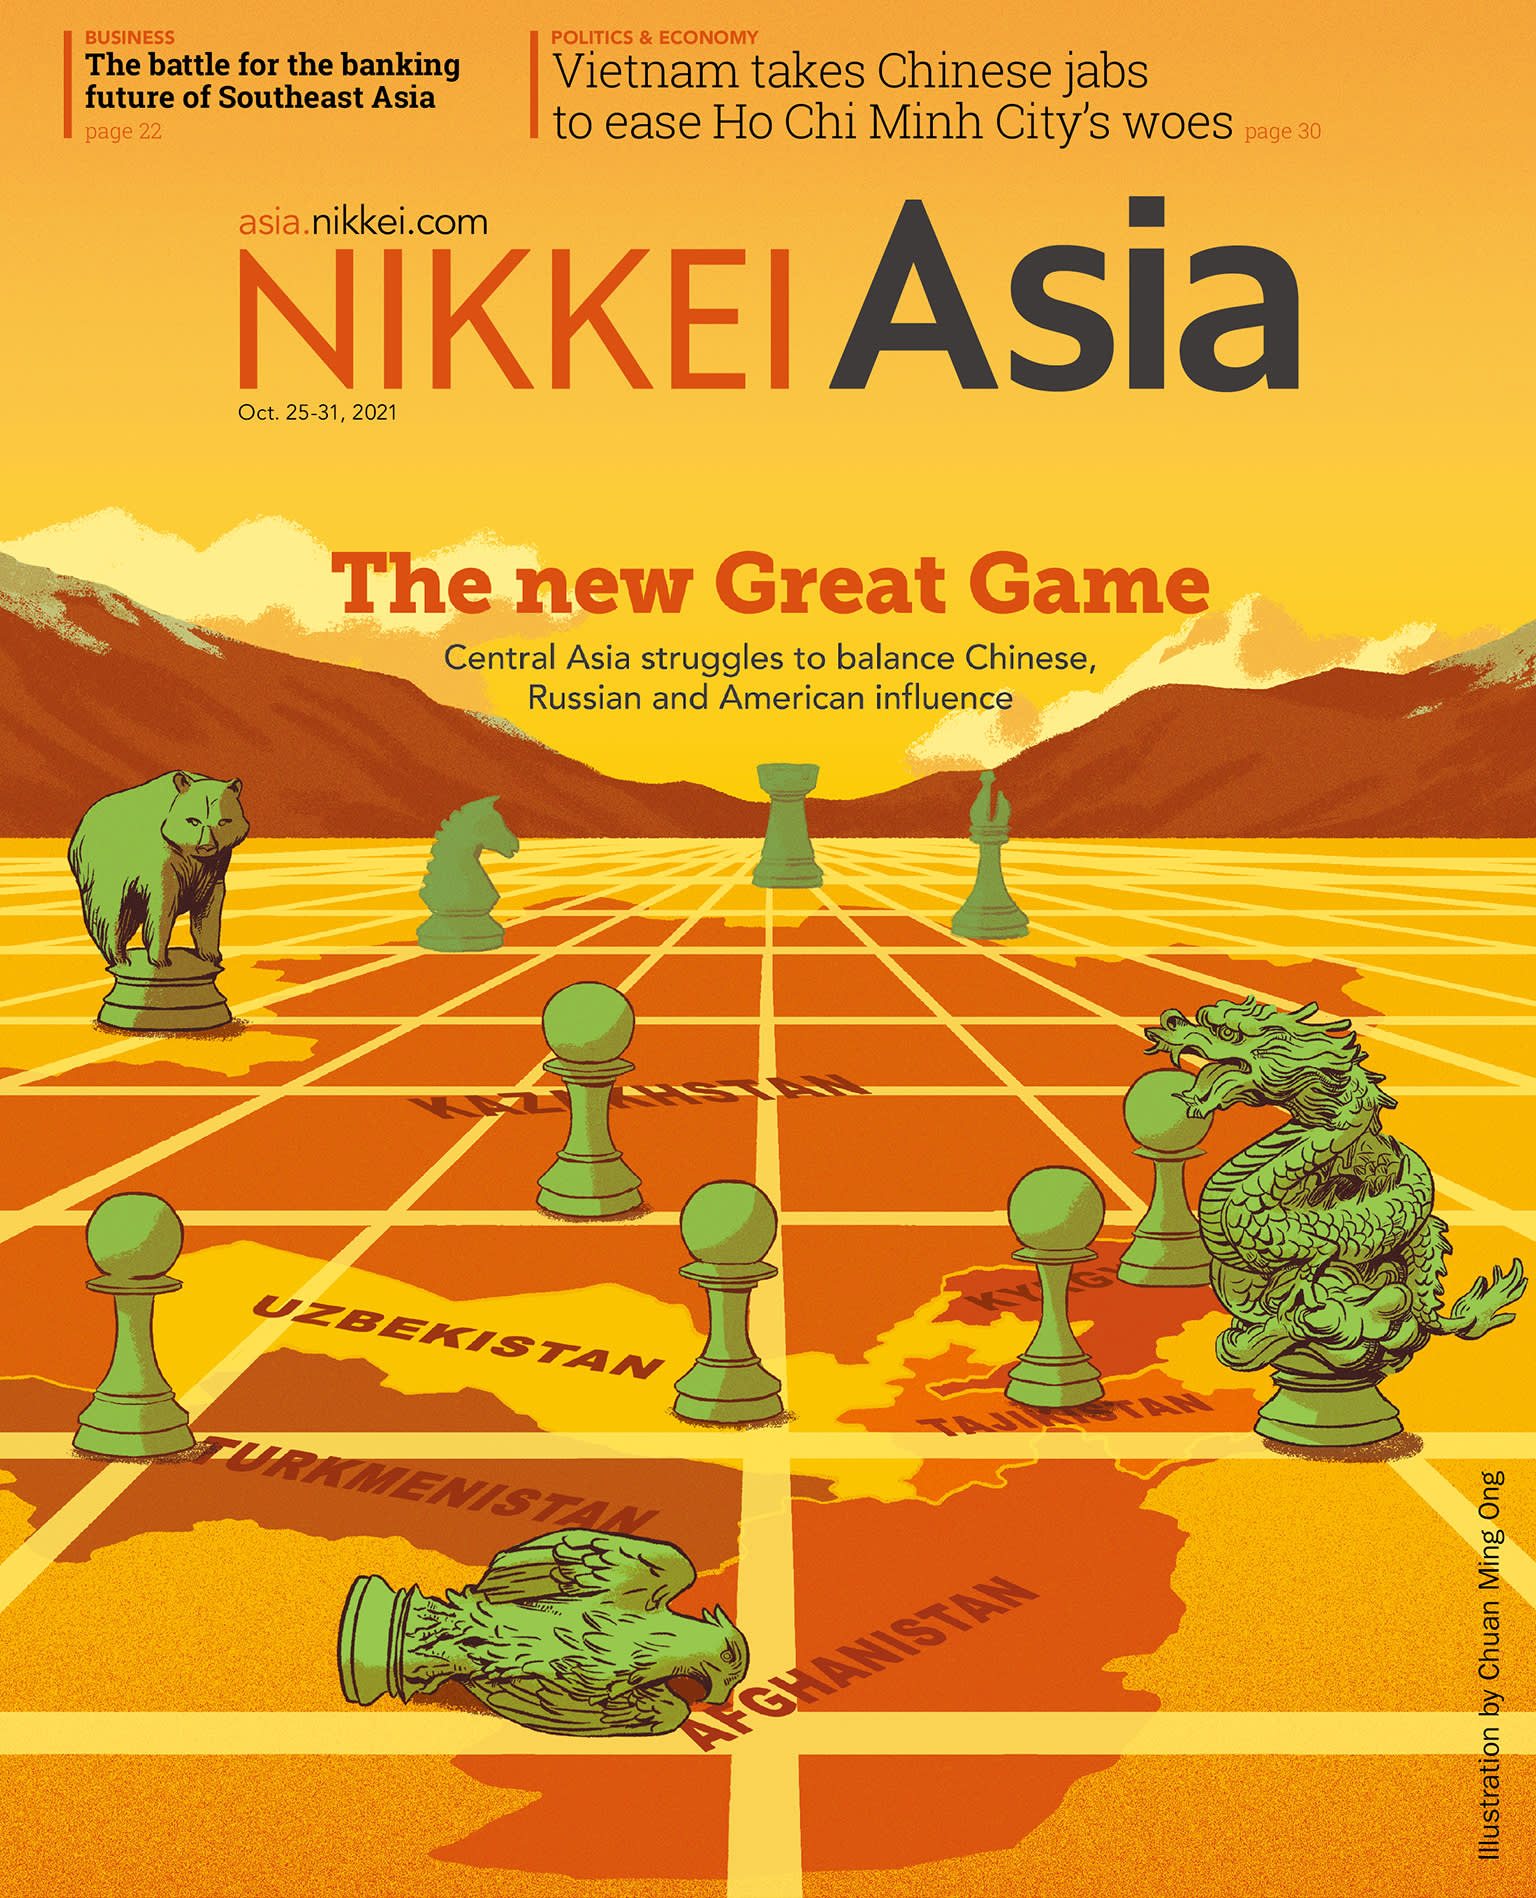 Nikkei Asian Review: Nikkei Asia - 2021: THE NEW GREAT GAME - 42.21 tạp chí kinh tế nước ngoài, nhập khẩu từ Singapore